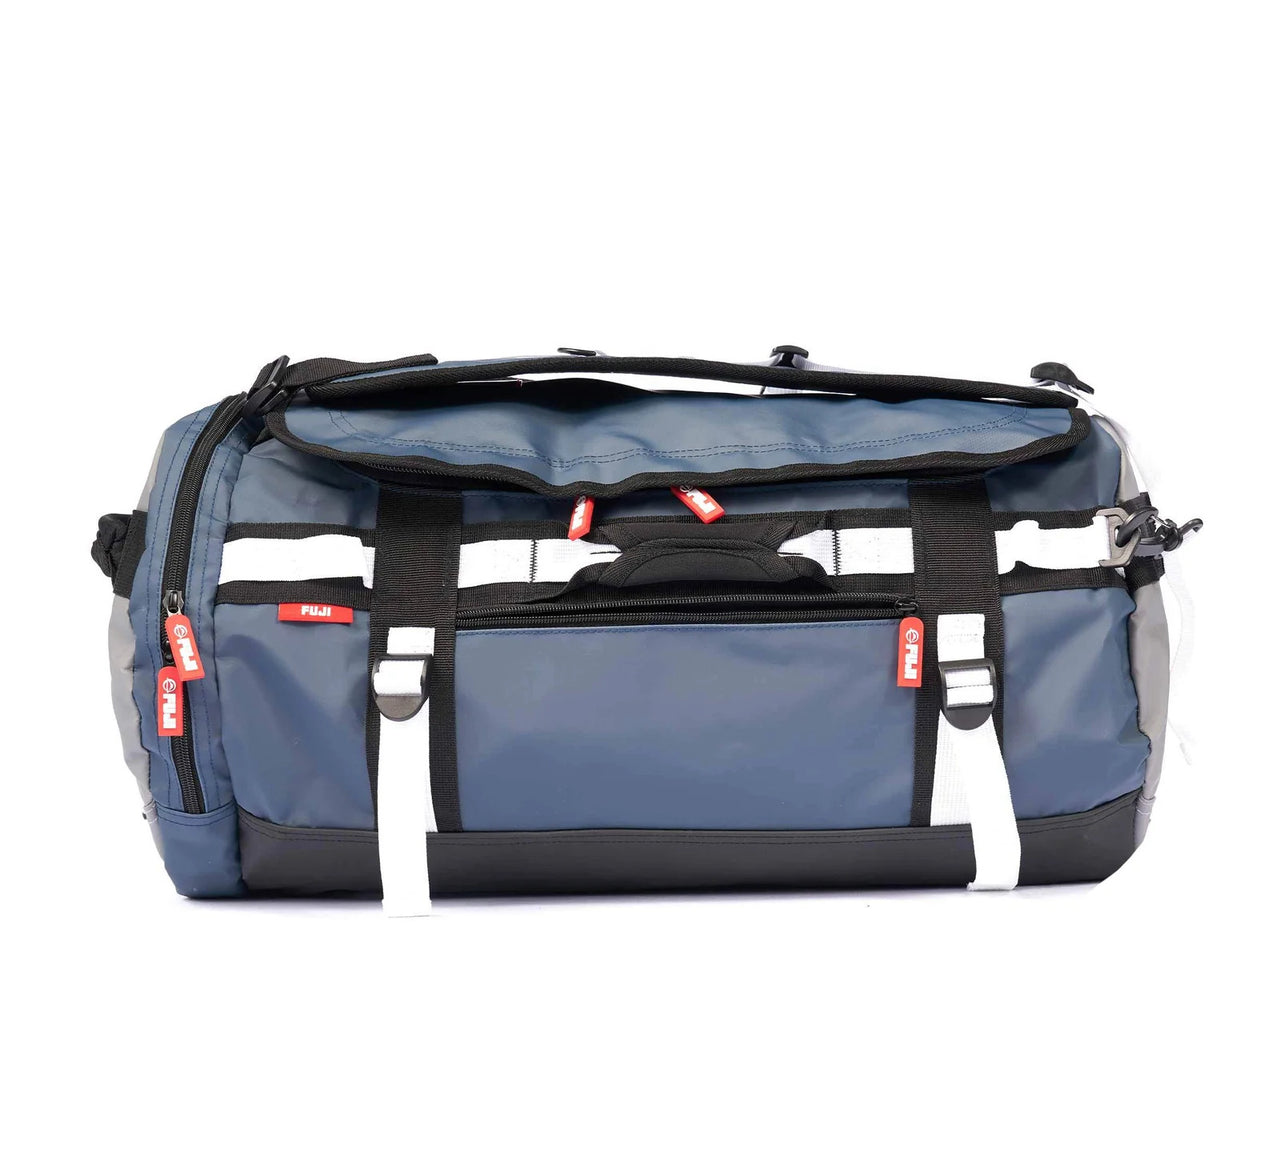 Fuji Comp Convertible Backpack Duffle - Navy